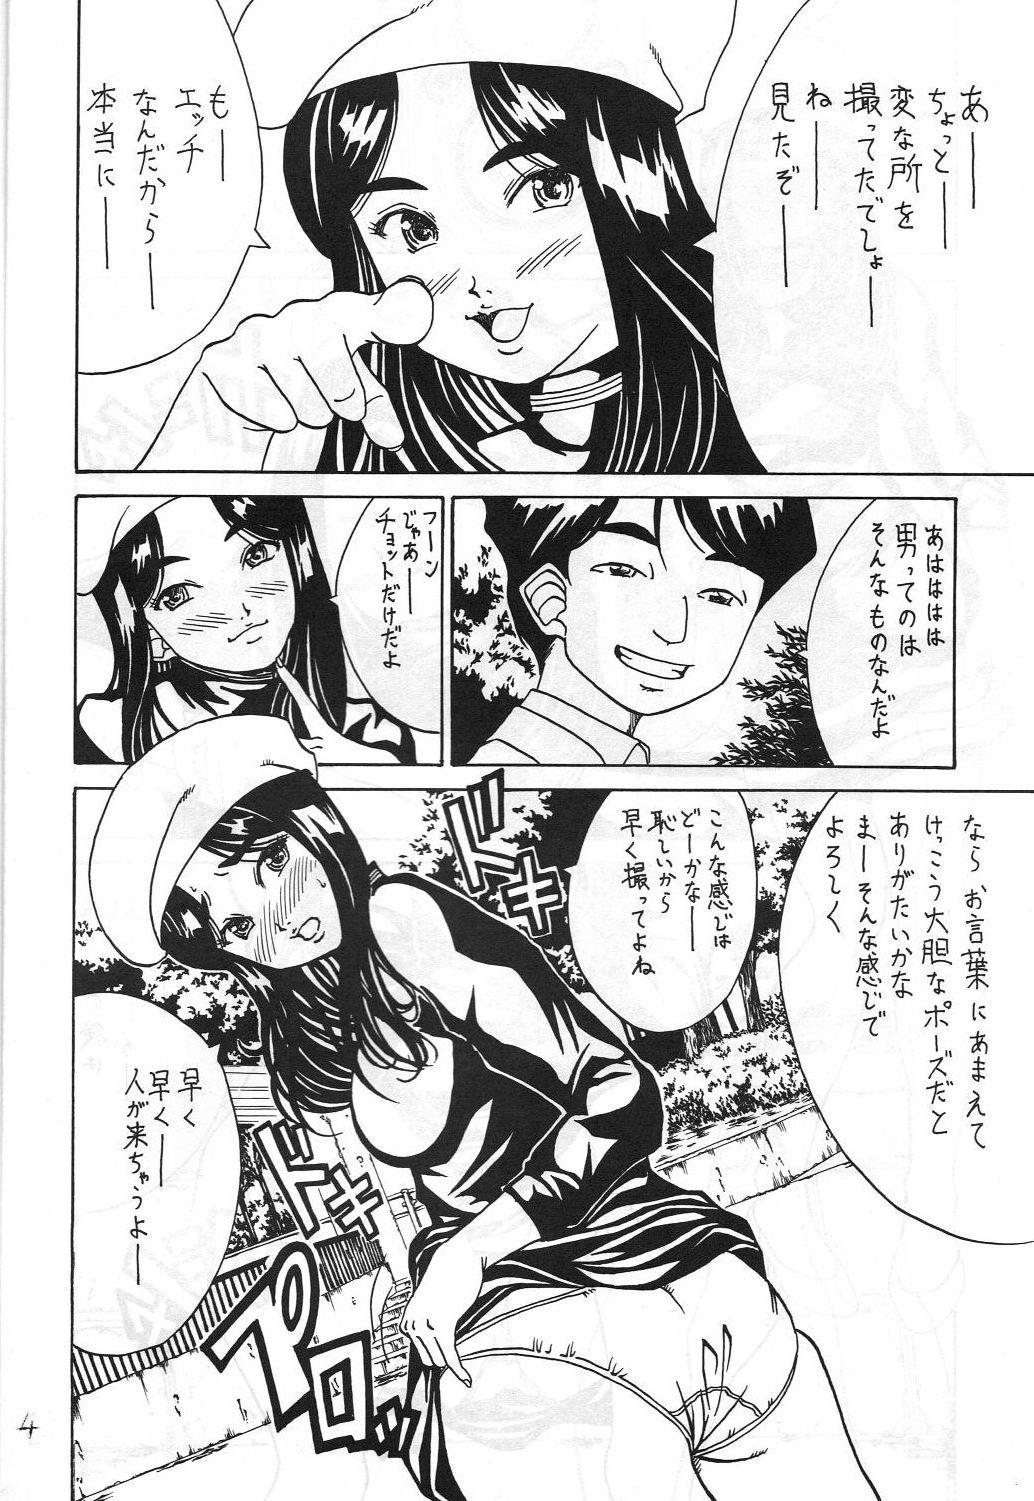 Nurumassage Kikansha ha Ore no Johnson in my life (Mitake) Eanakuoto (Ah! Megami-sama/Ah! My Goddess) - Ah my goddess Groupfuck - Page 5